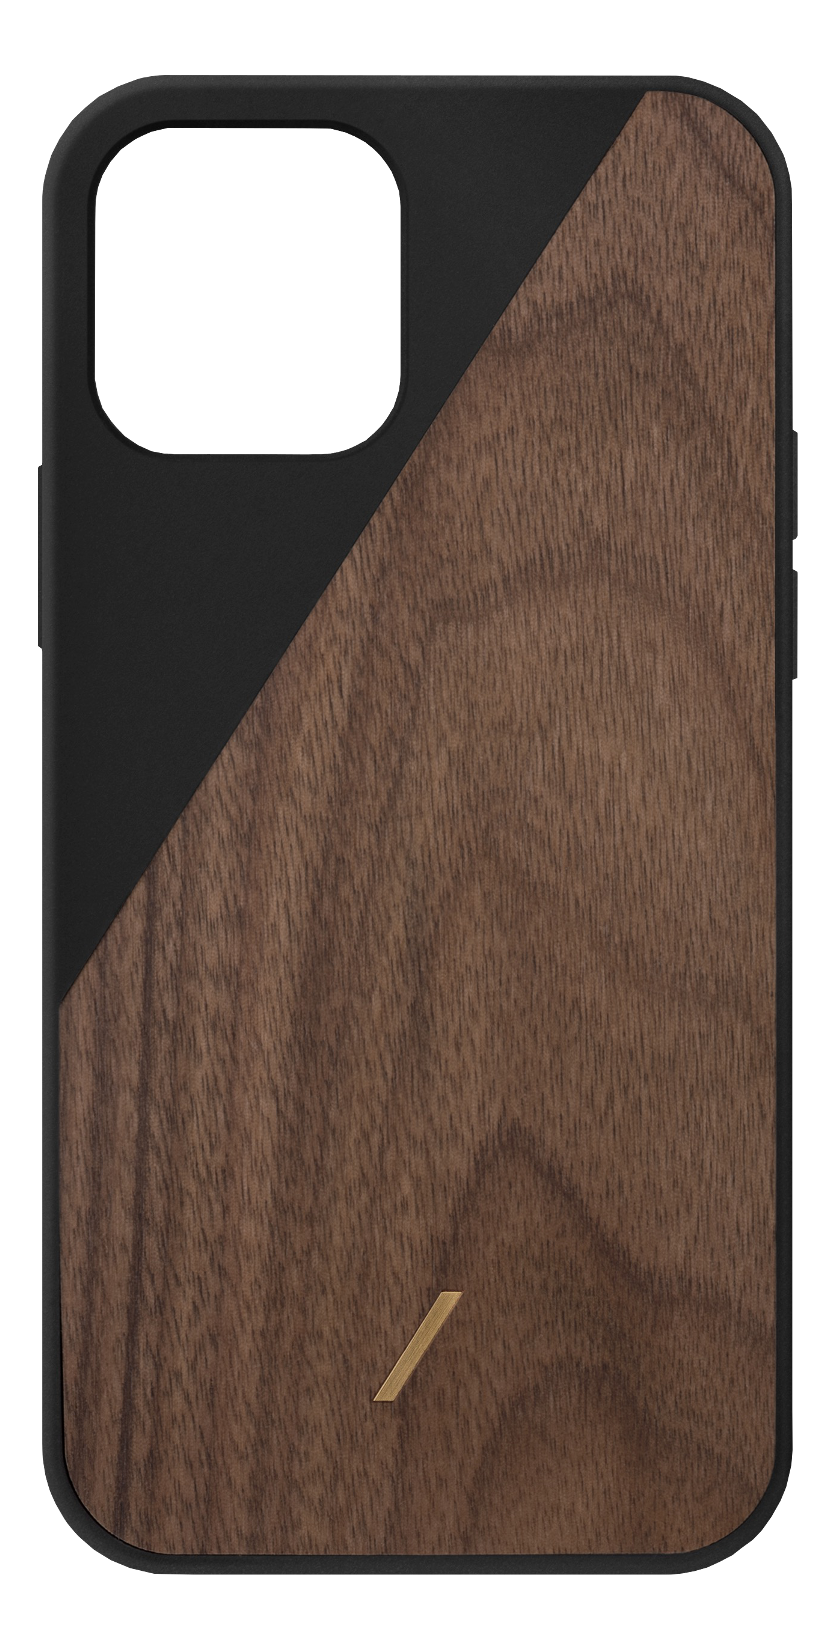 NATIVE UNION Clic Wooden - Schutzhülle (Passend für Modell: Apple iPhone 12 Pro Max)